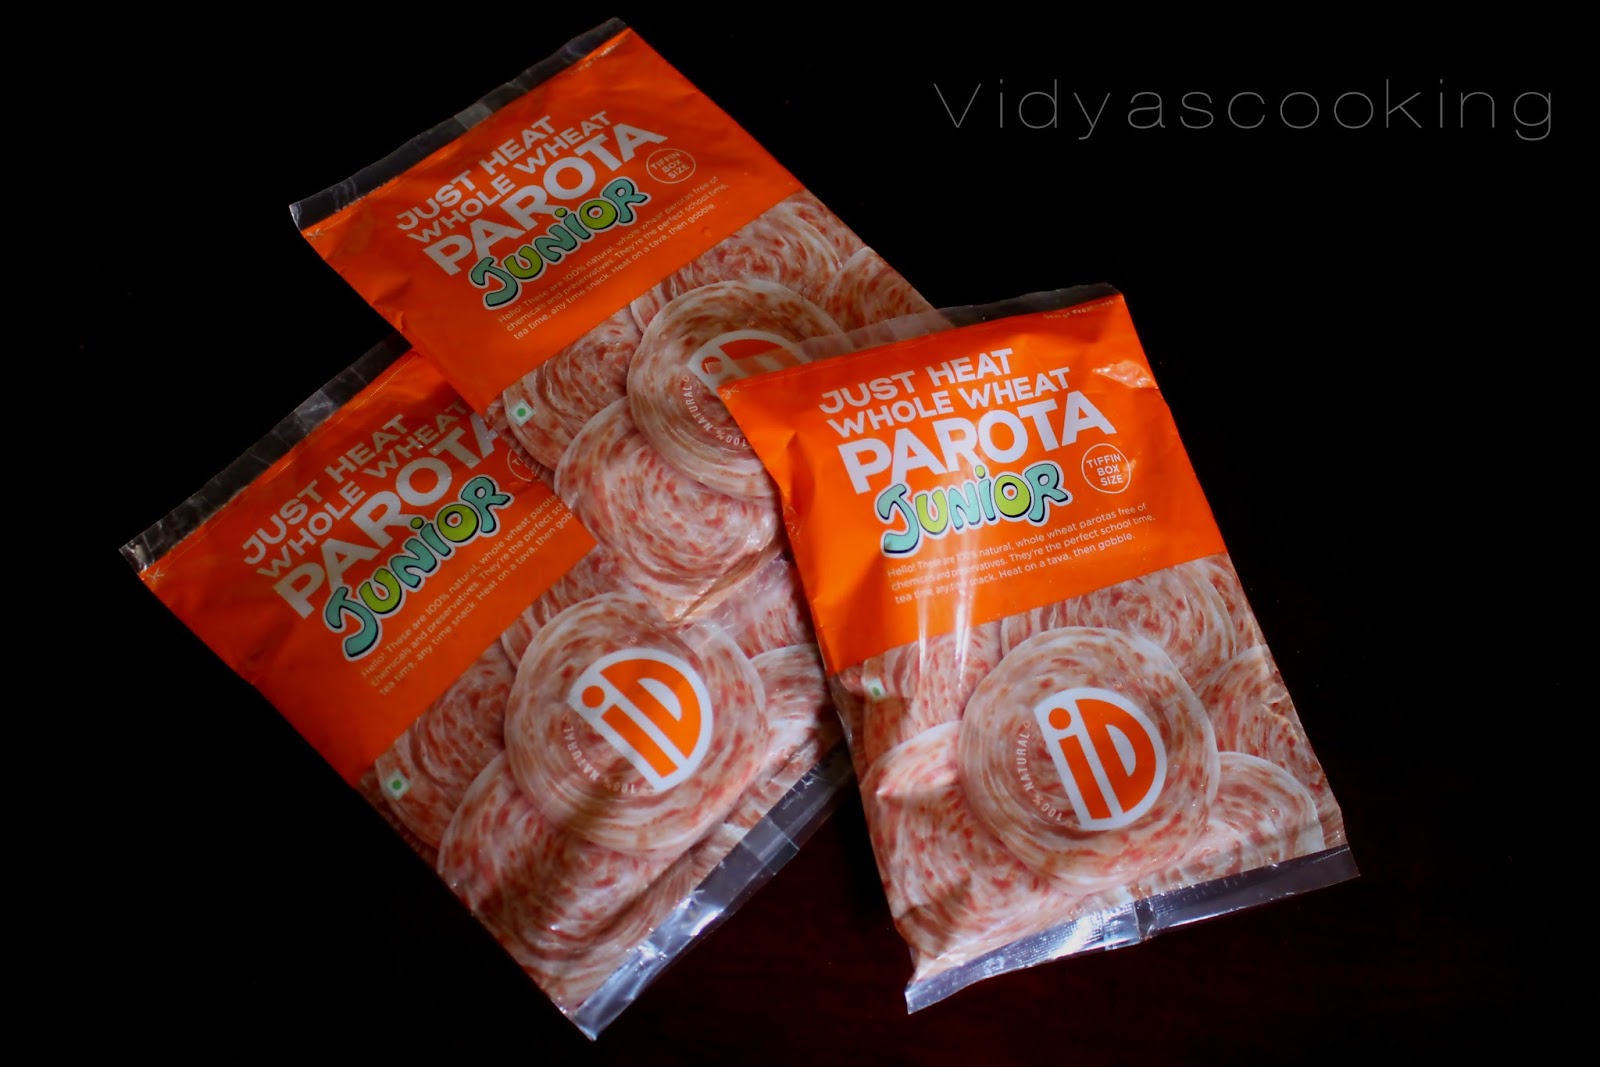 Review iD Junior Parota and Whole Wheat Cheesy Quesadillas Recipe